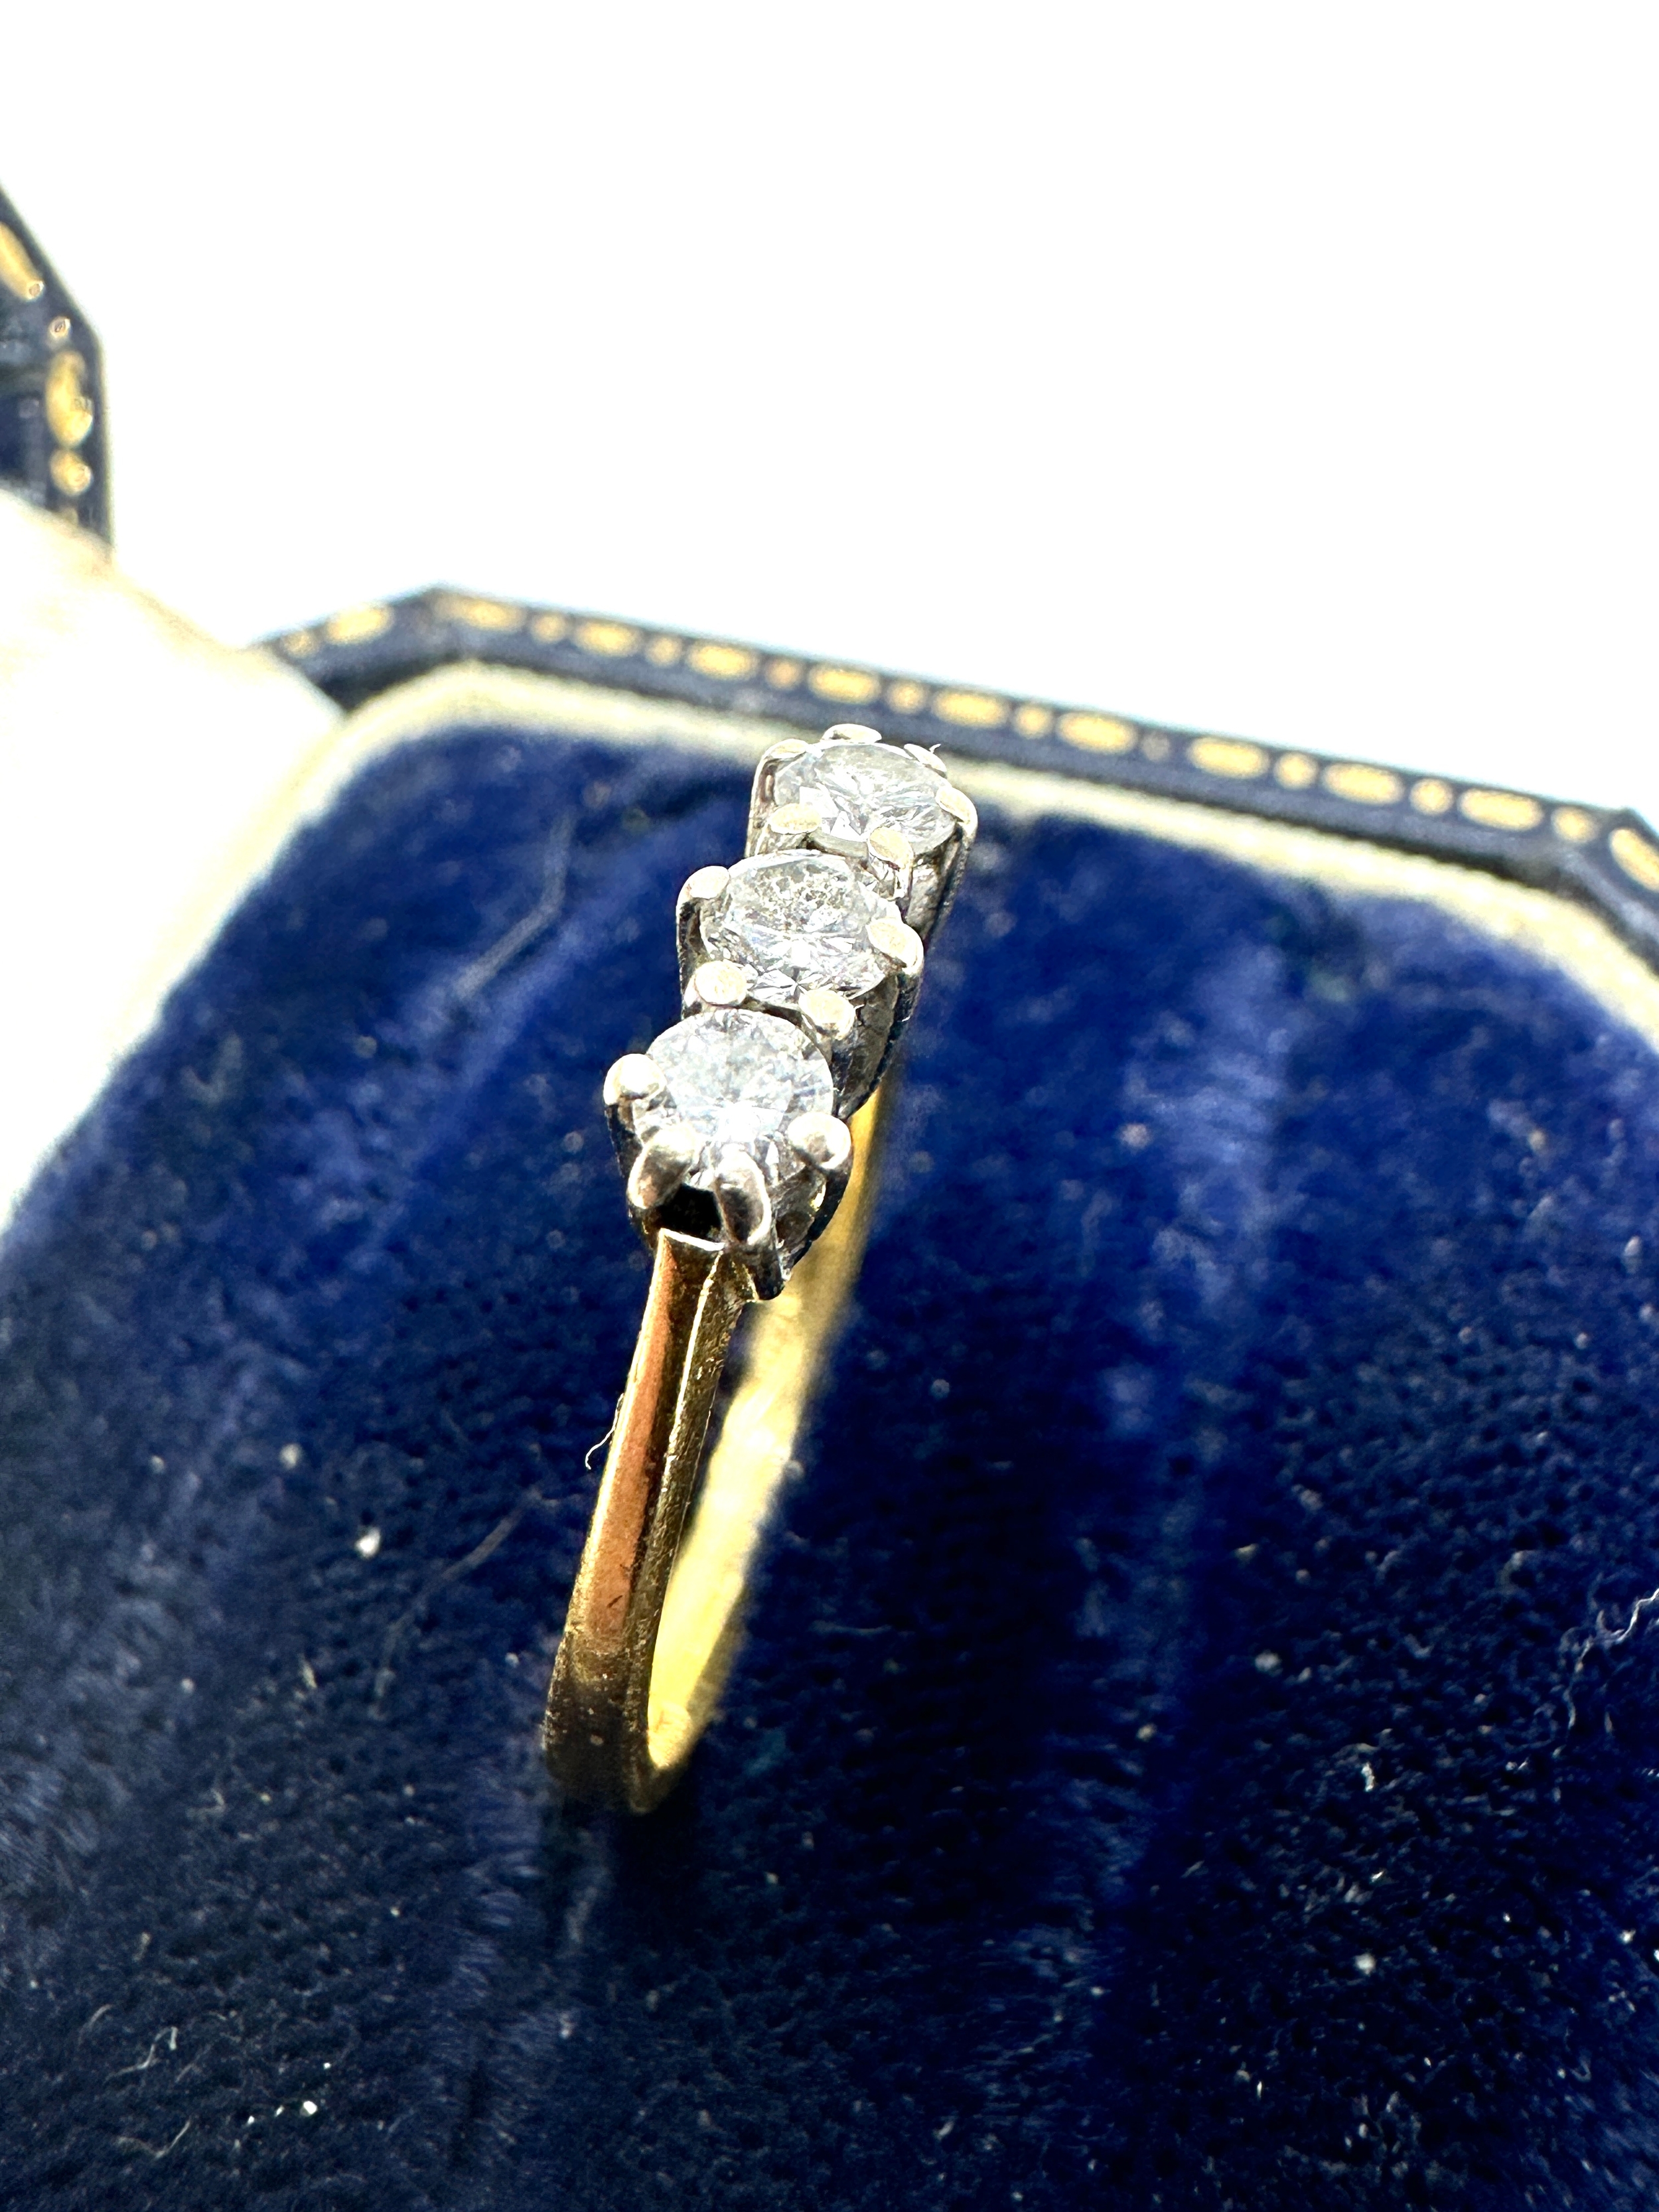 18ct gold diamond ring weight 2g - Image 3 of 4